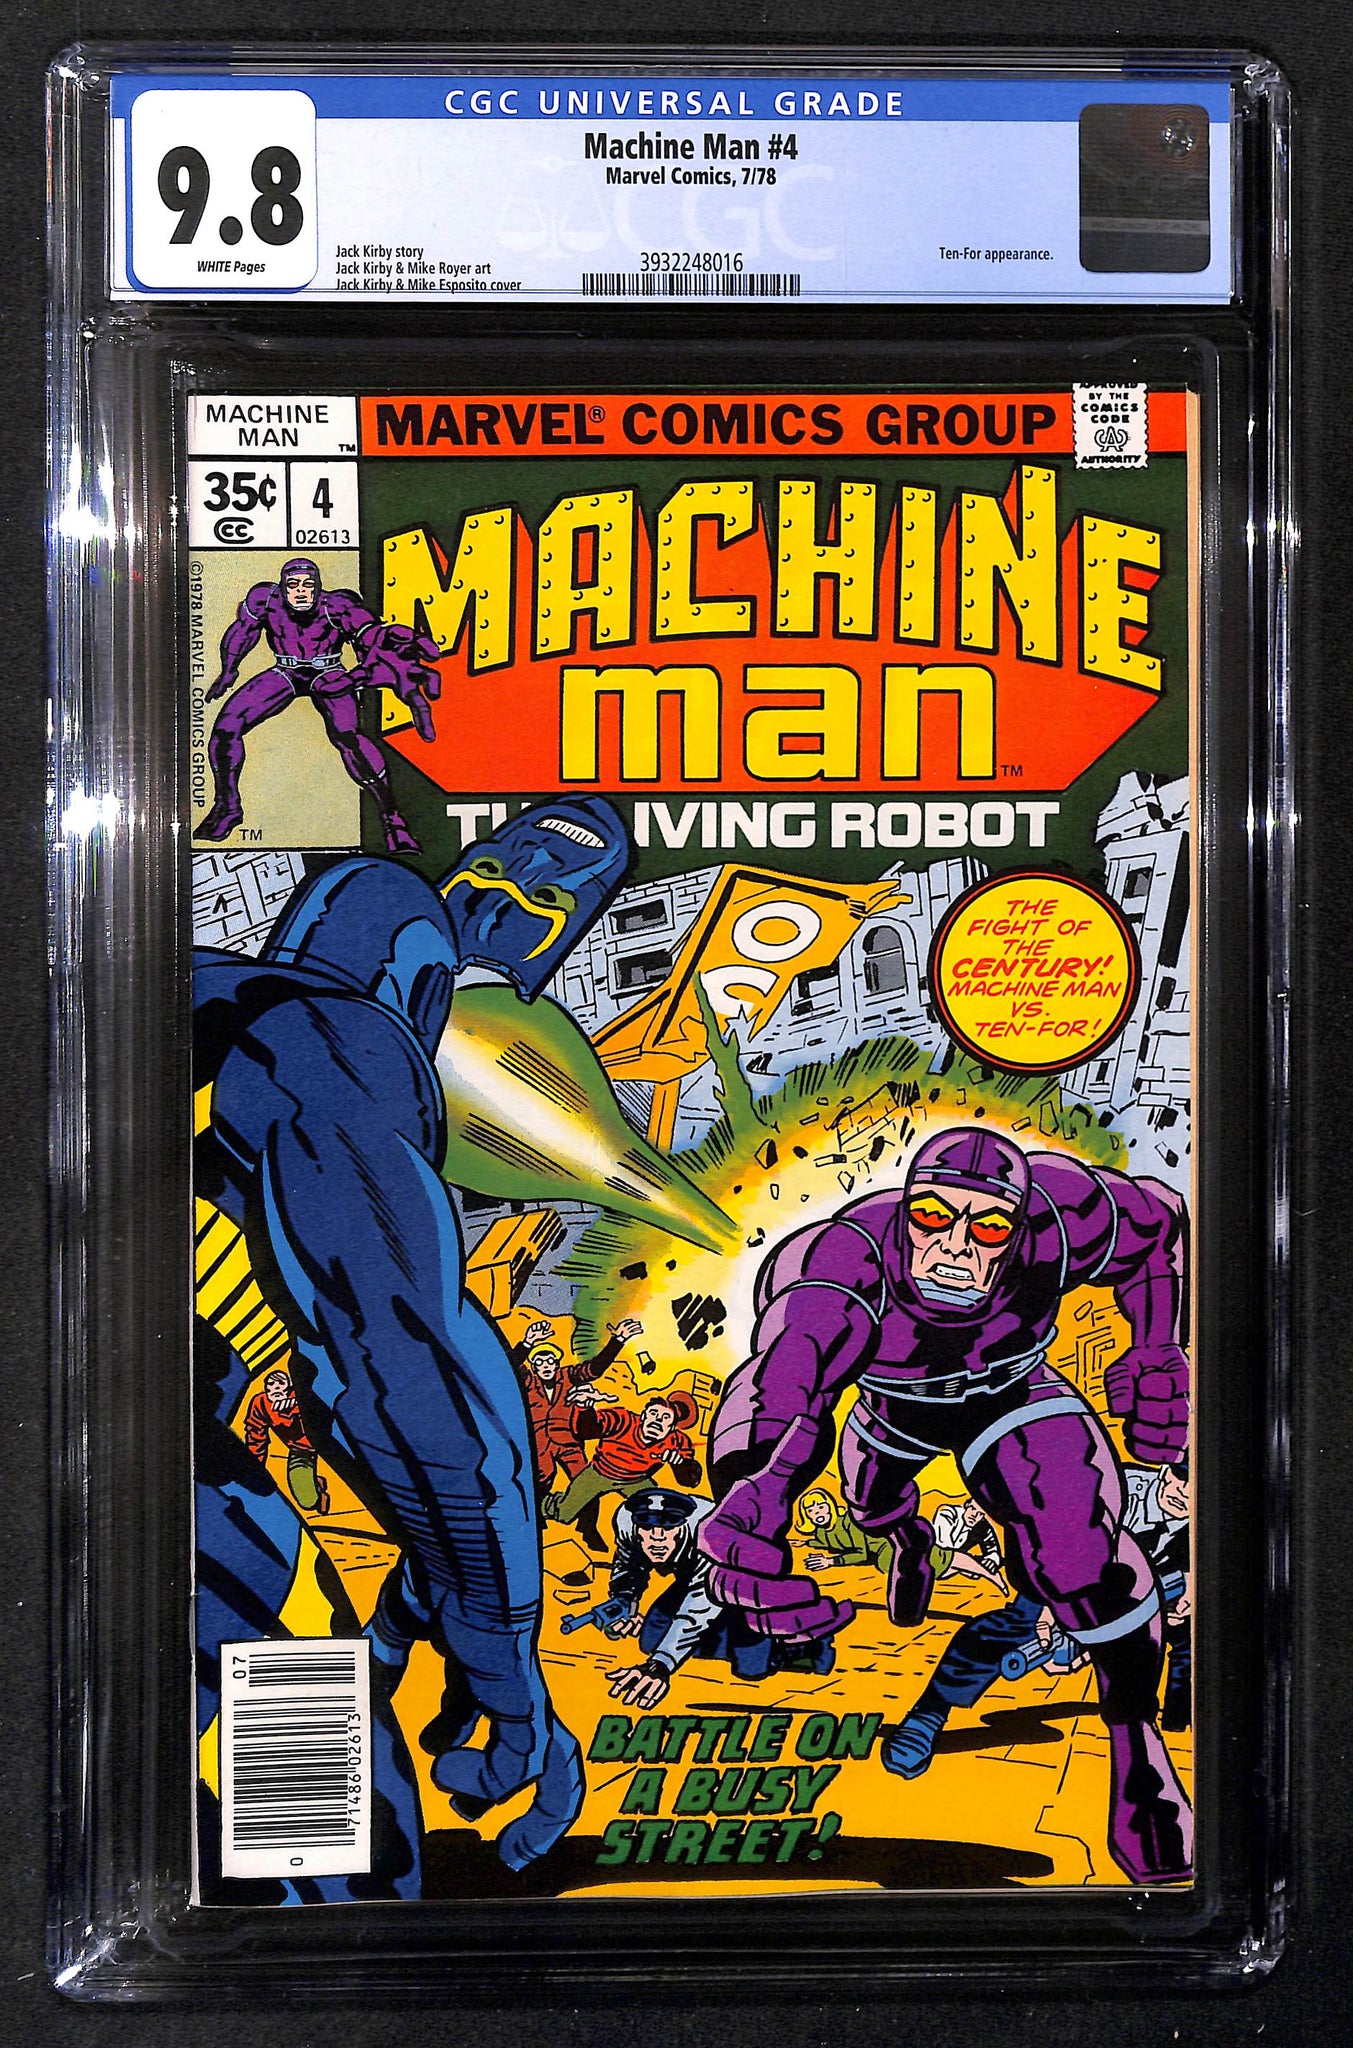 Machine Man #4 CGC 9.8 Ten-for appearance